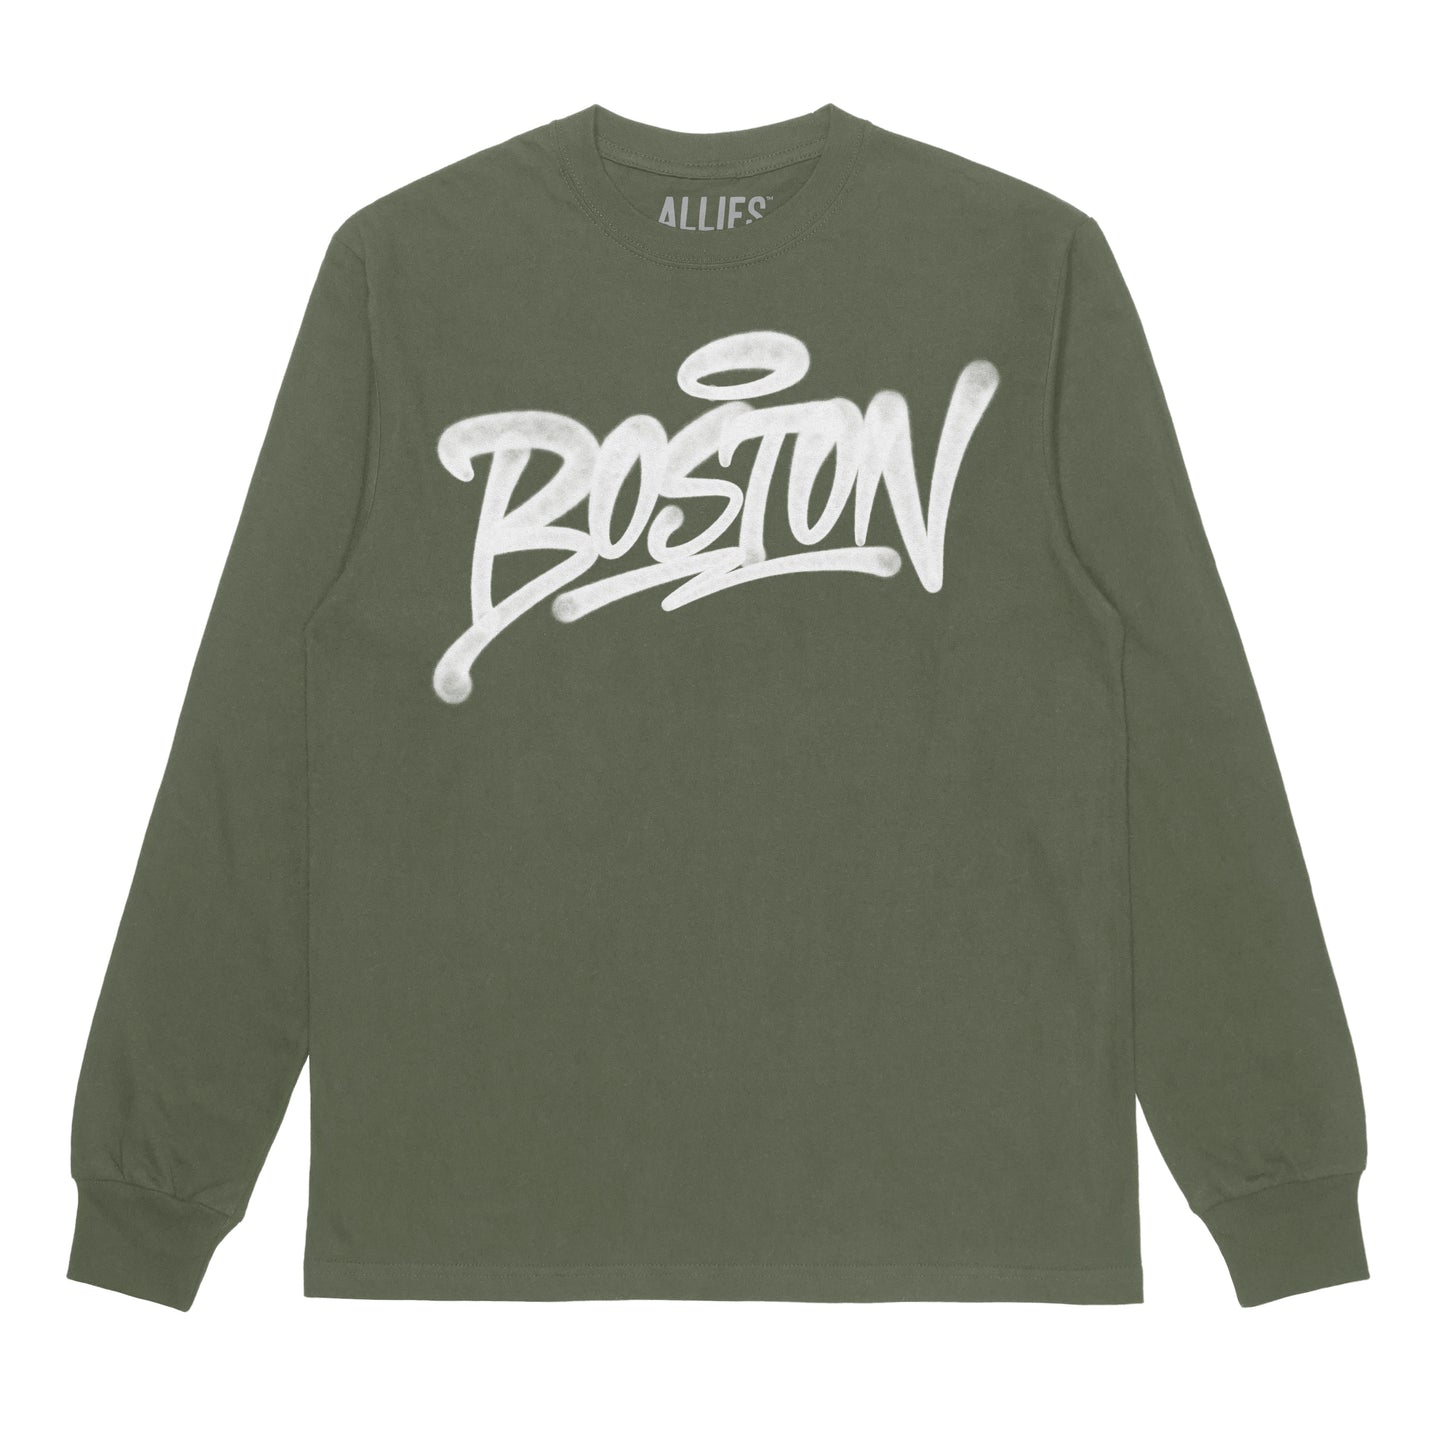 Boston Handstyle T-shirt